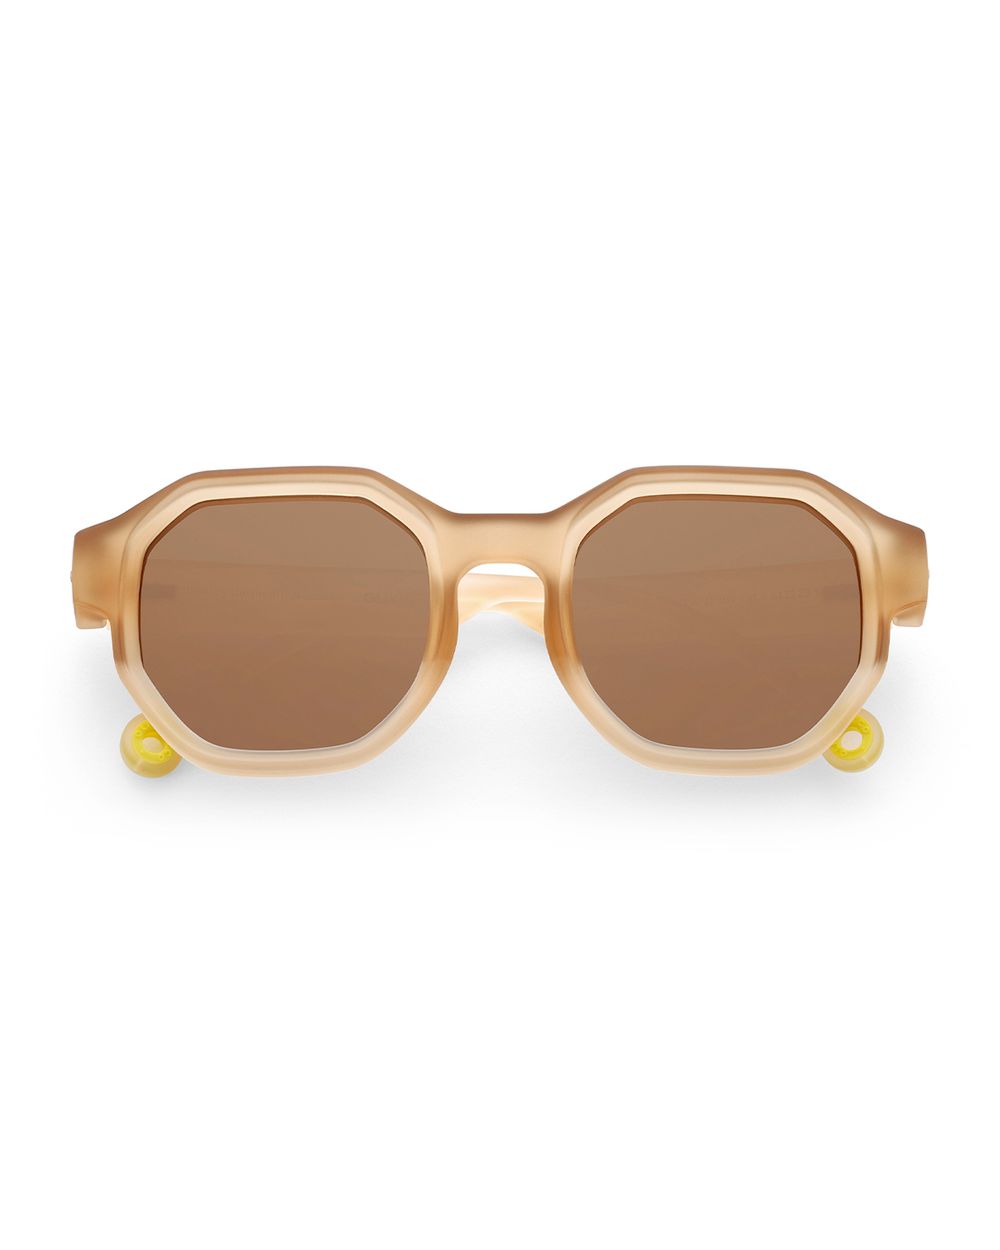 Junior, Adult Sunglasses Colorblock Sand #D